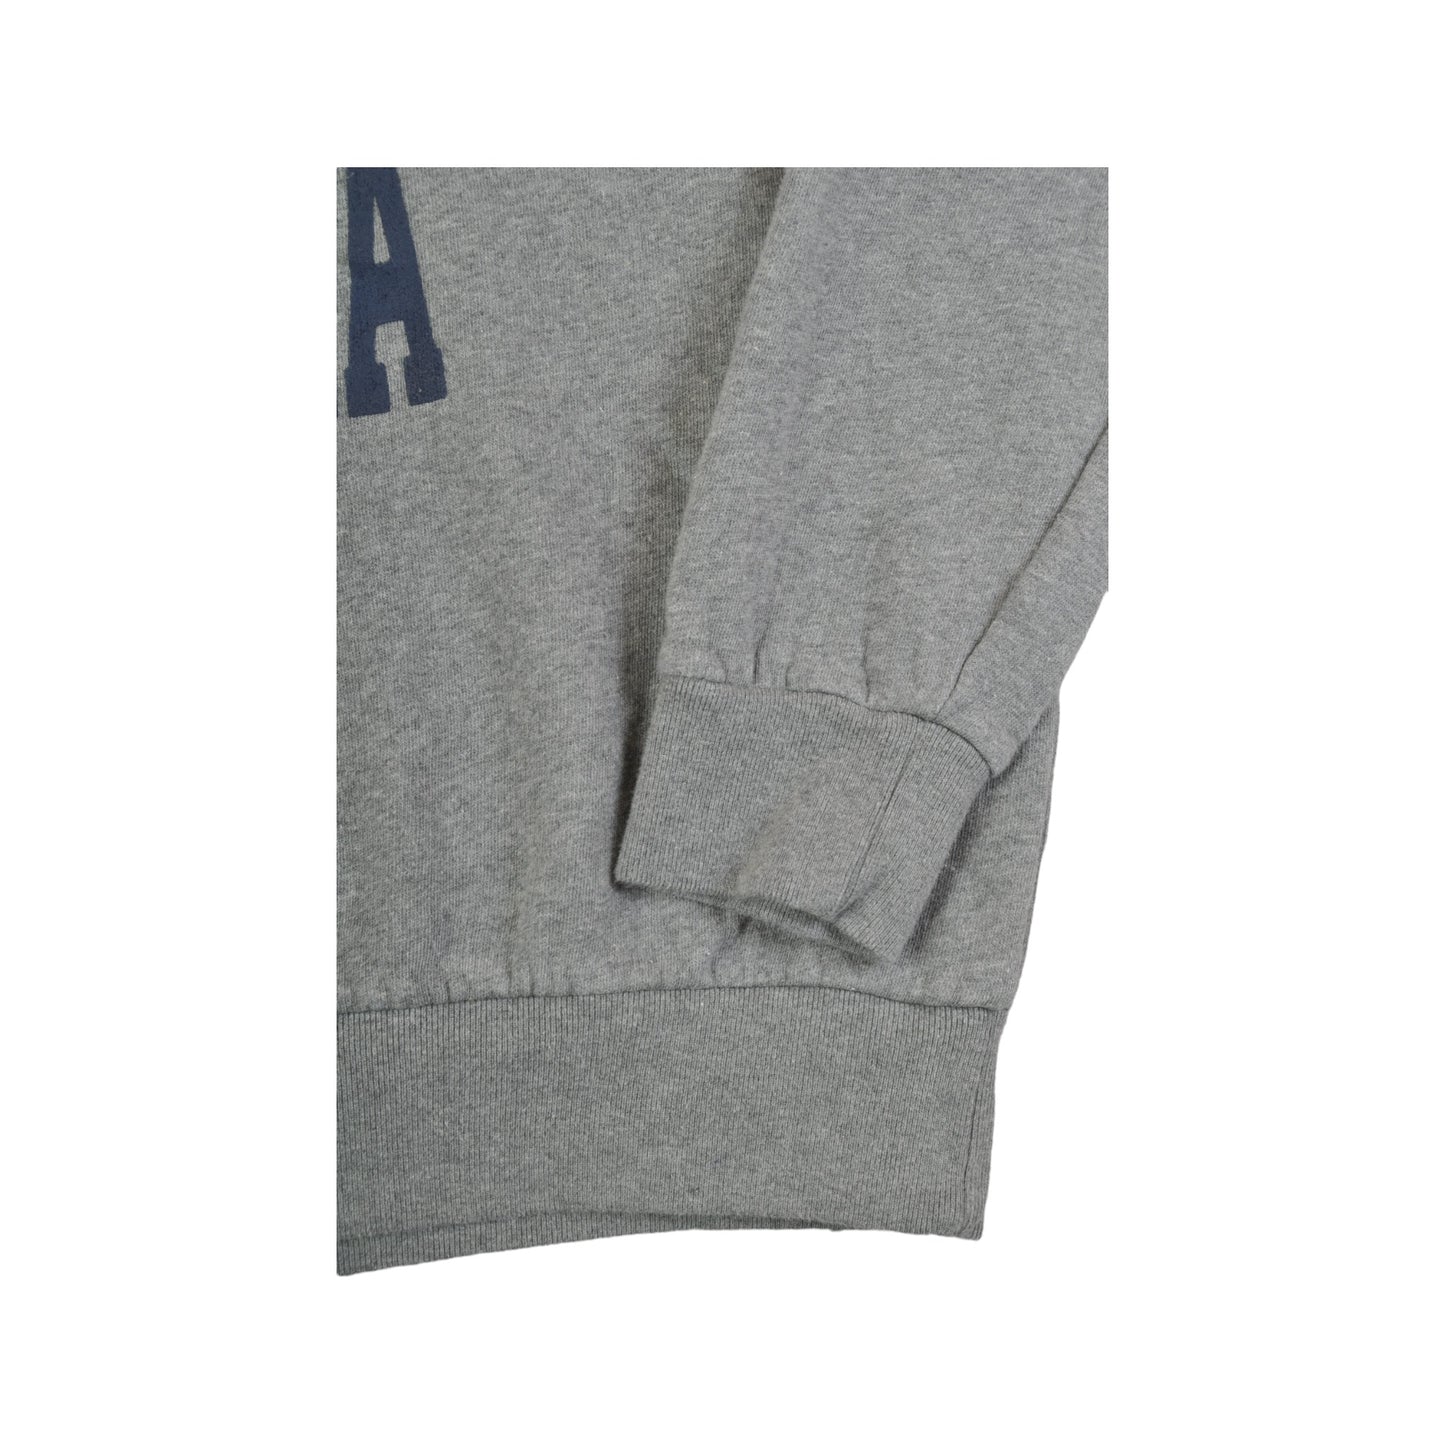 Vintage Los Angeles California Sweatshirt Grey Large